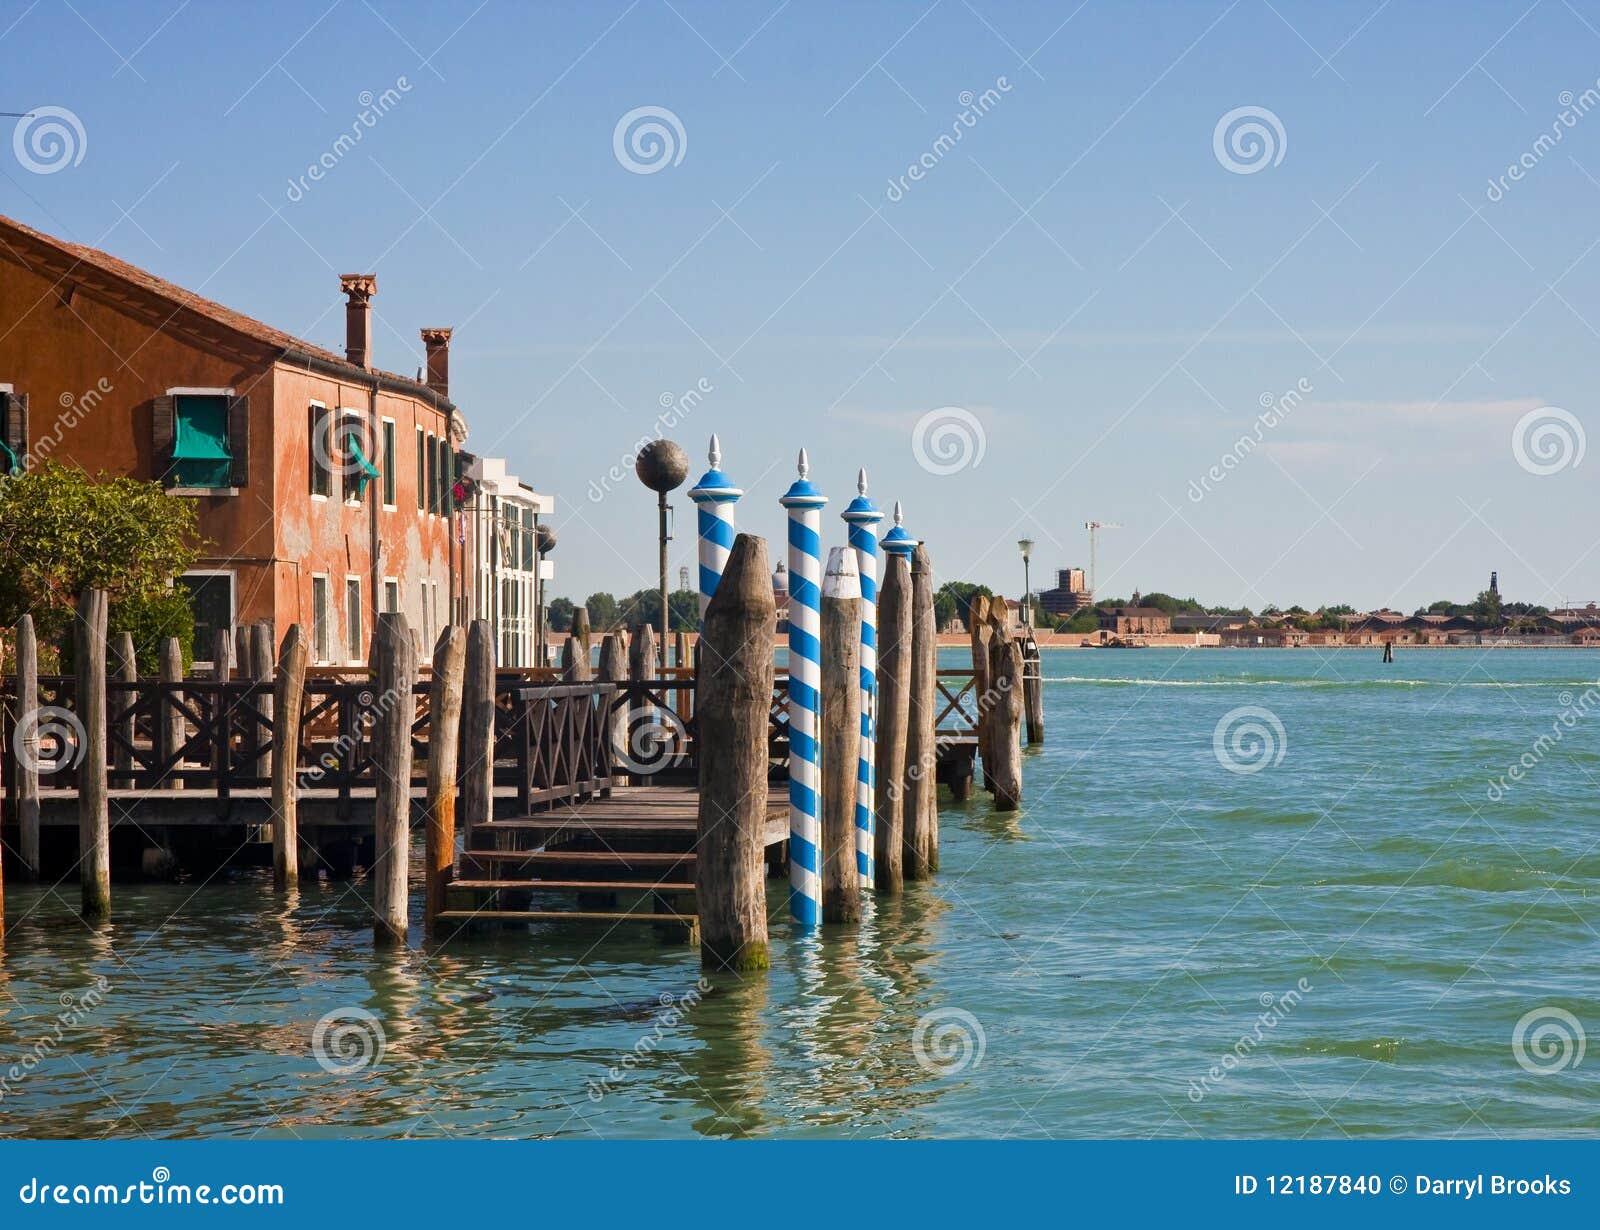 Boat Dock On Old Venice Building Stock Photo - Image: 12187840